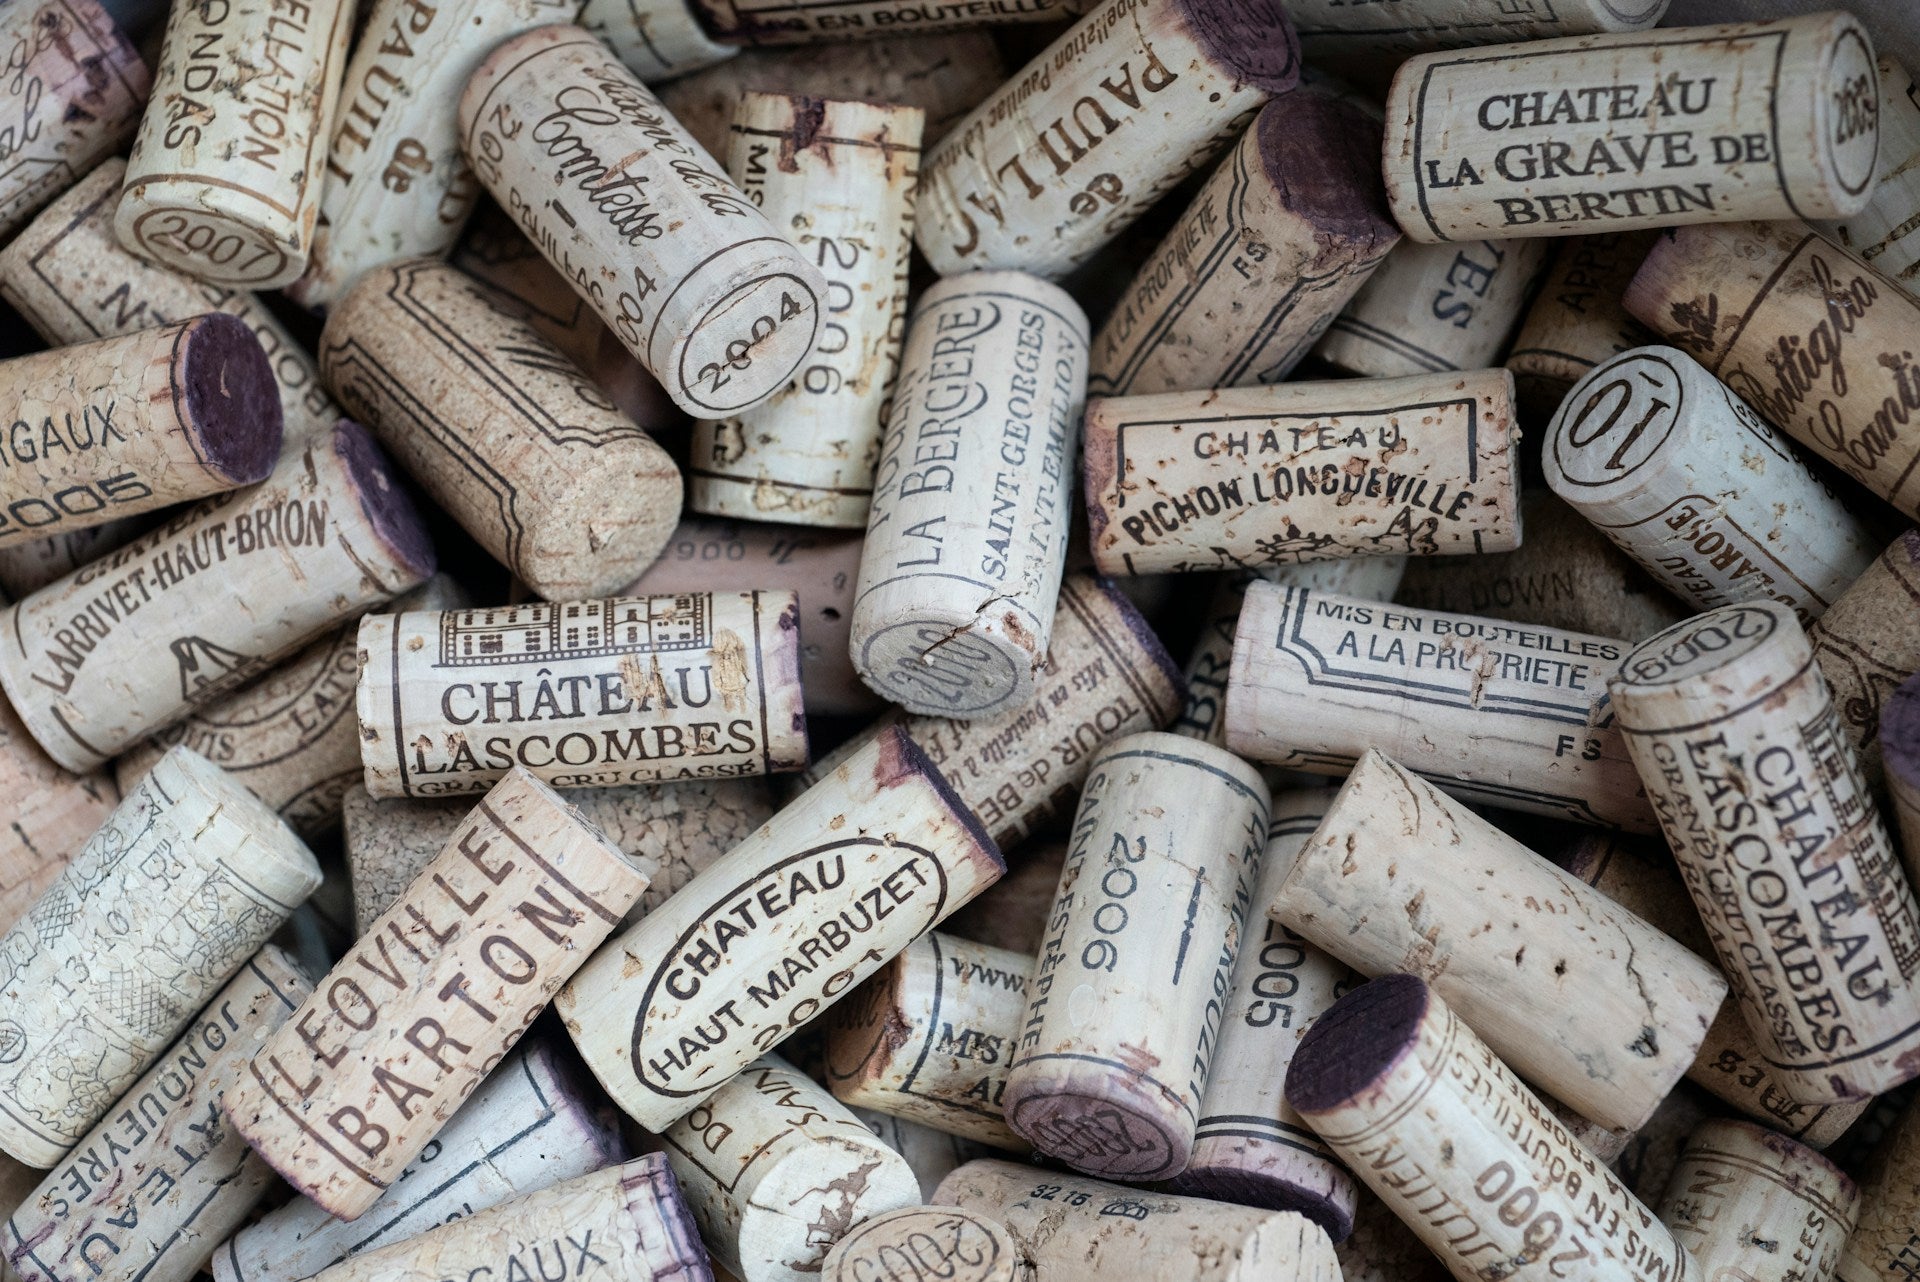 French fine wine bordeaux wine corks